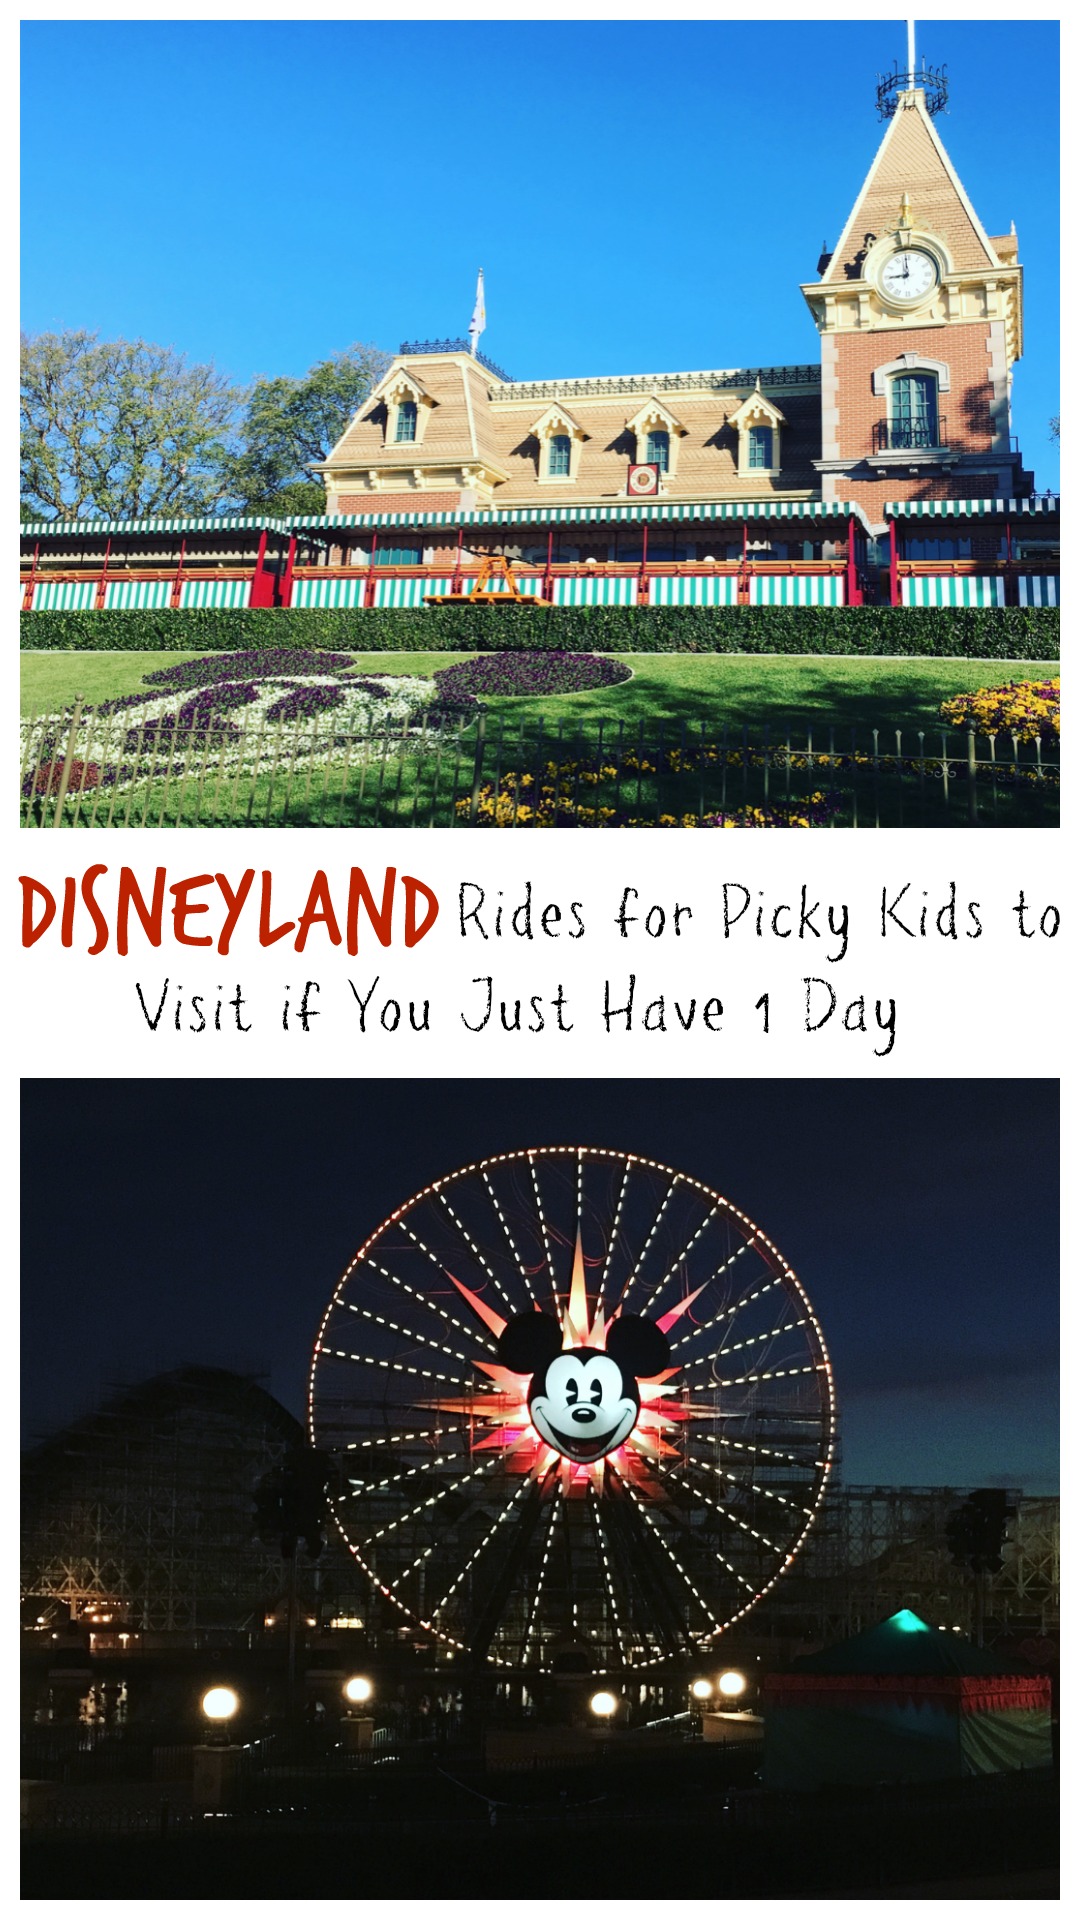 Disneyland Rides for Picky Kids